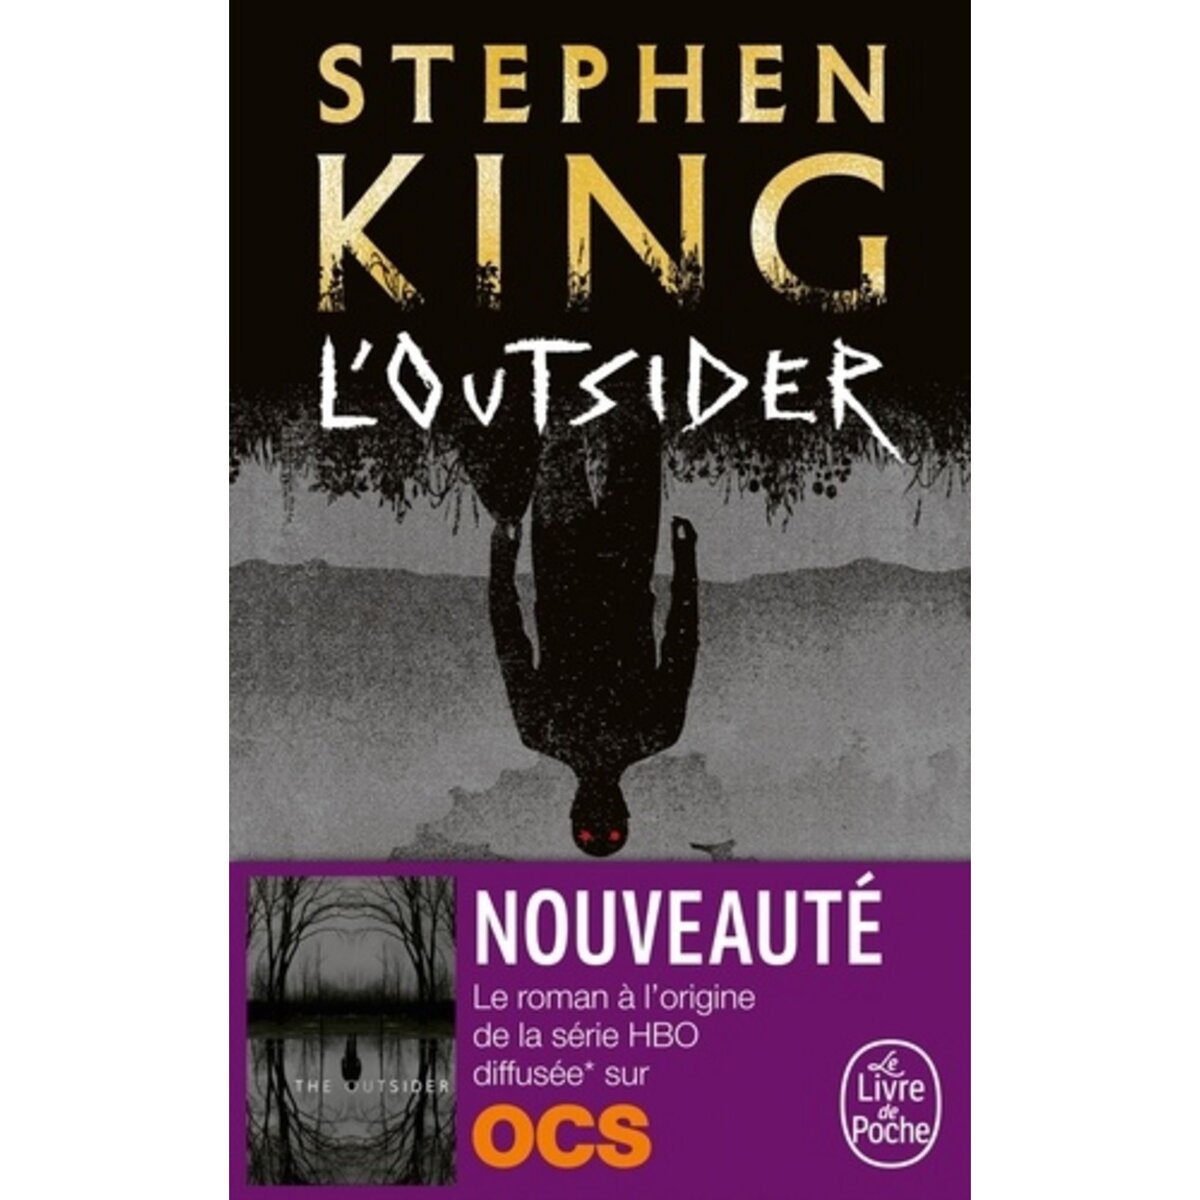  L'OUTSIDER, King Stephen